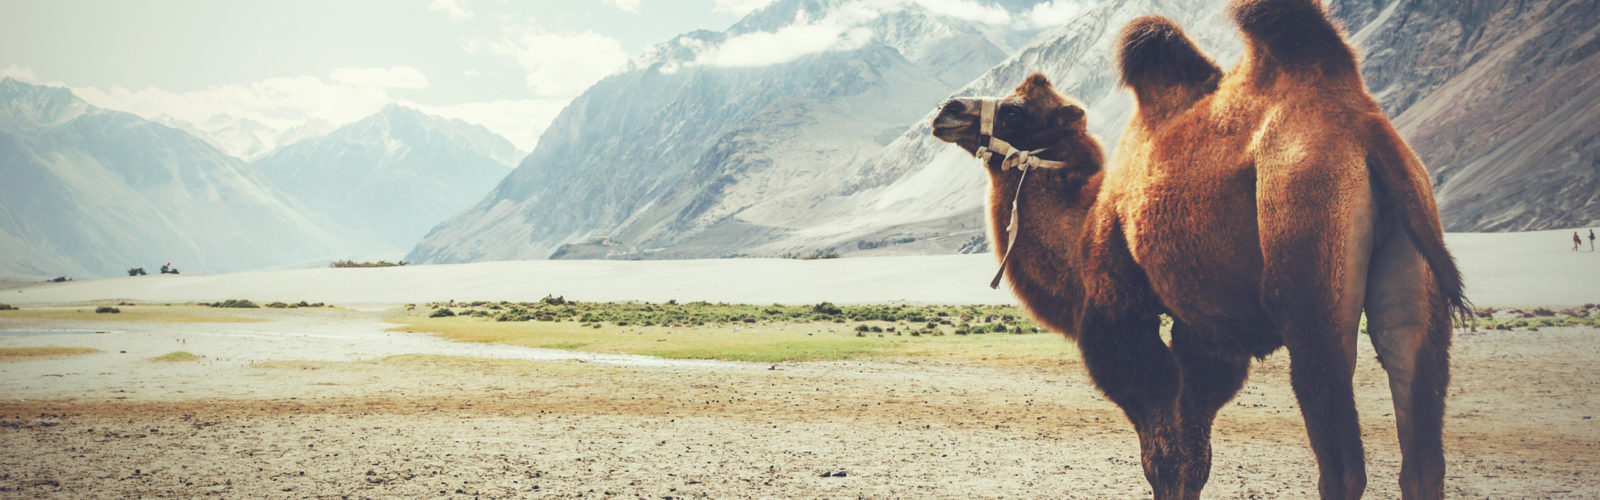 ladakh-camel